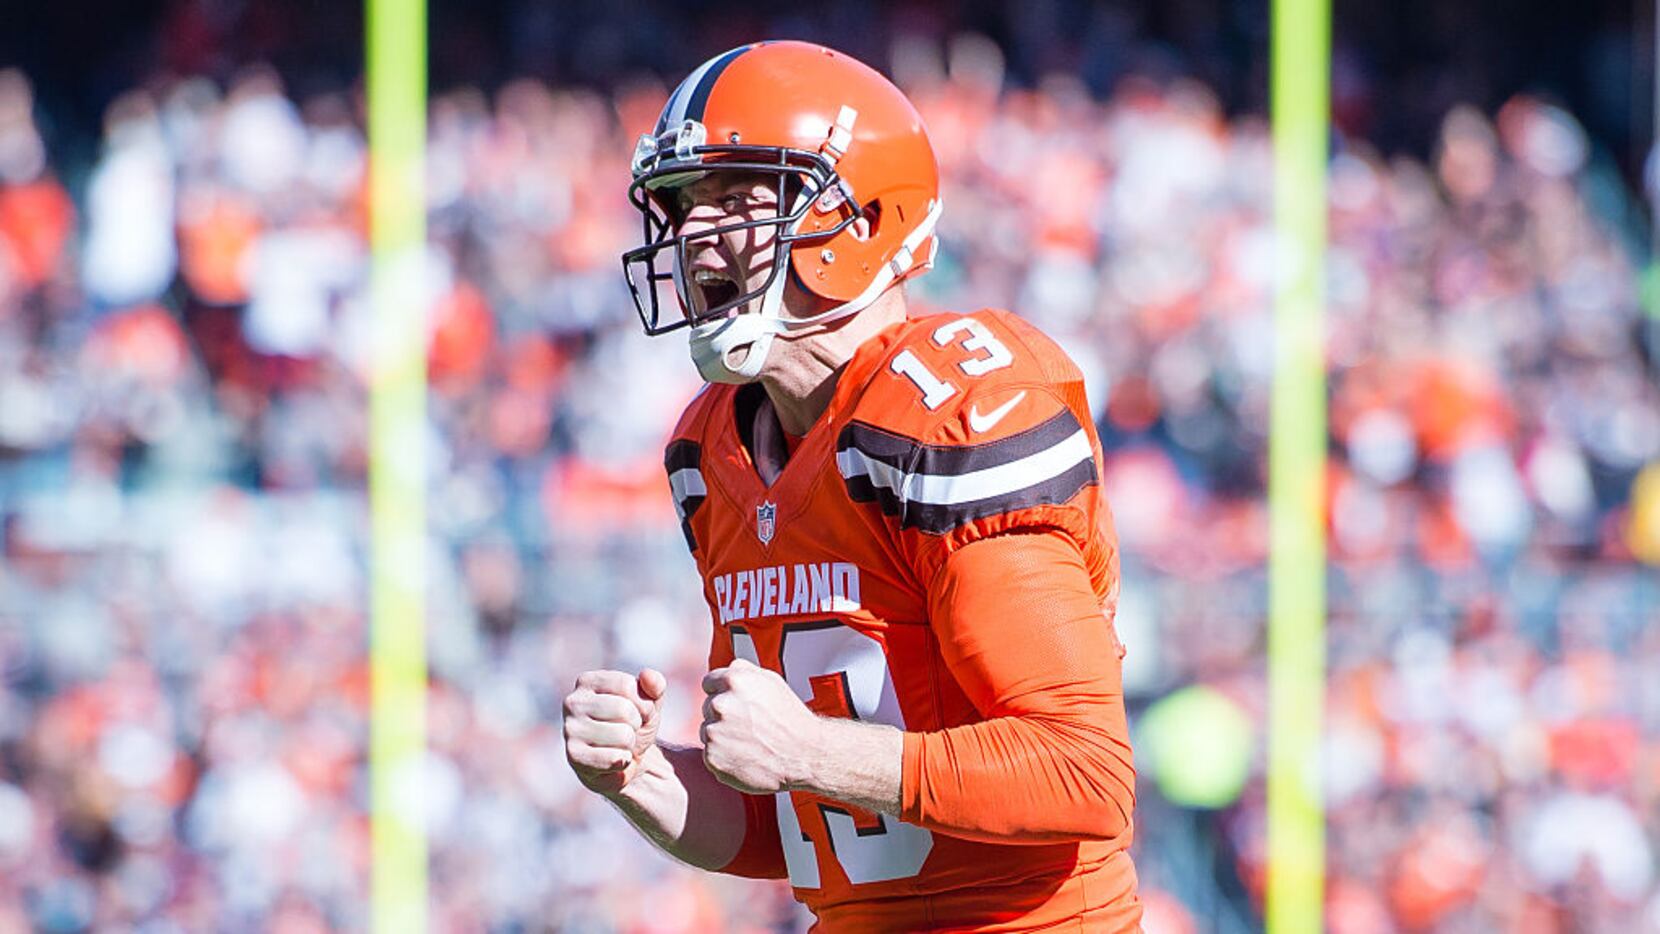 CLEVELAND, OH - NOVEMBER 1: Quarterback Josh McCown #13 of the Cleveland Browns celebrates...